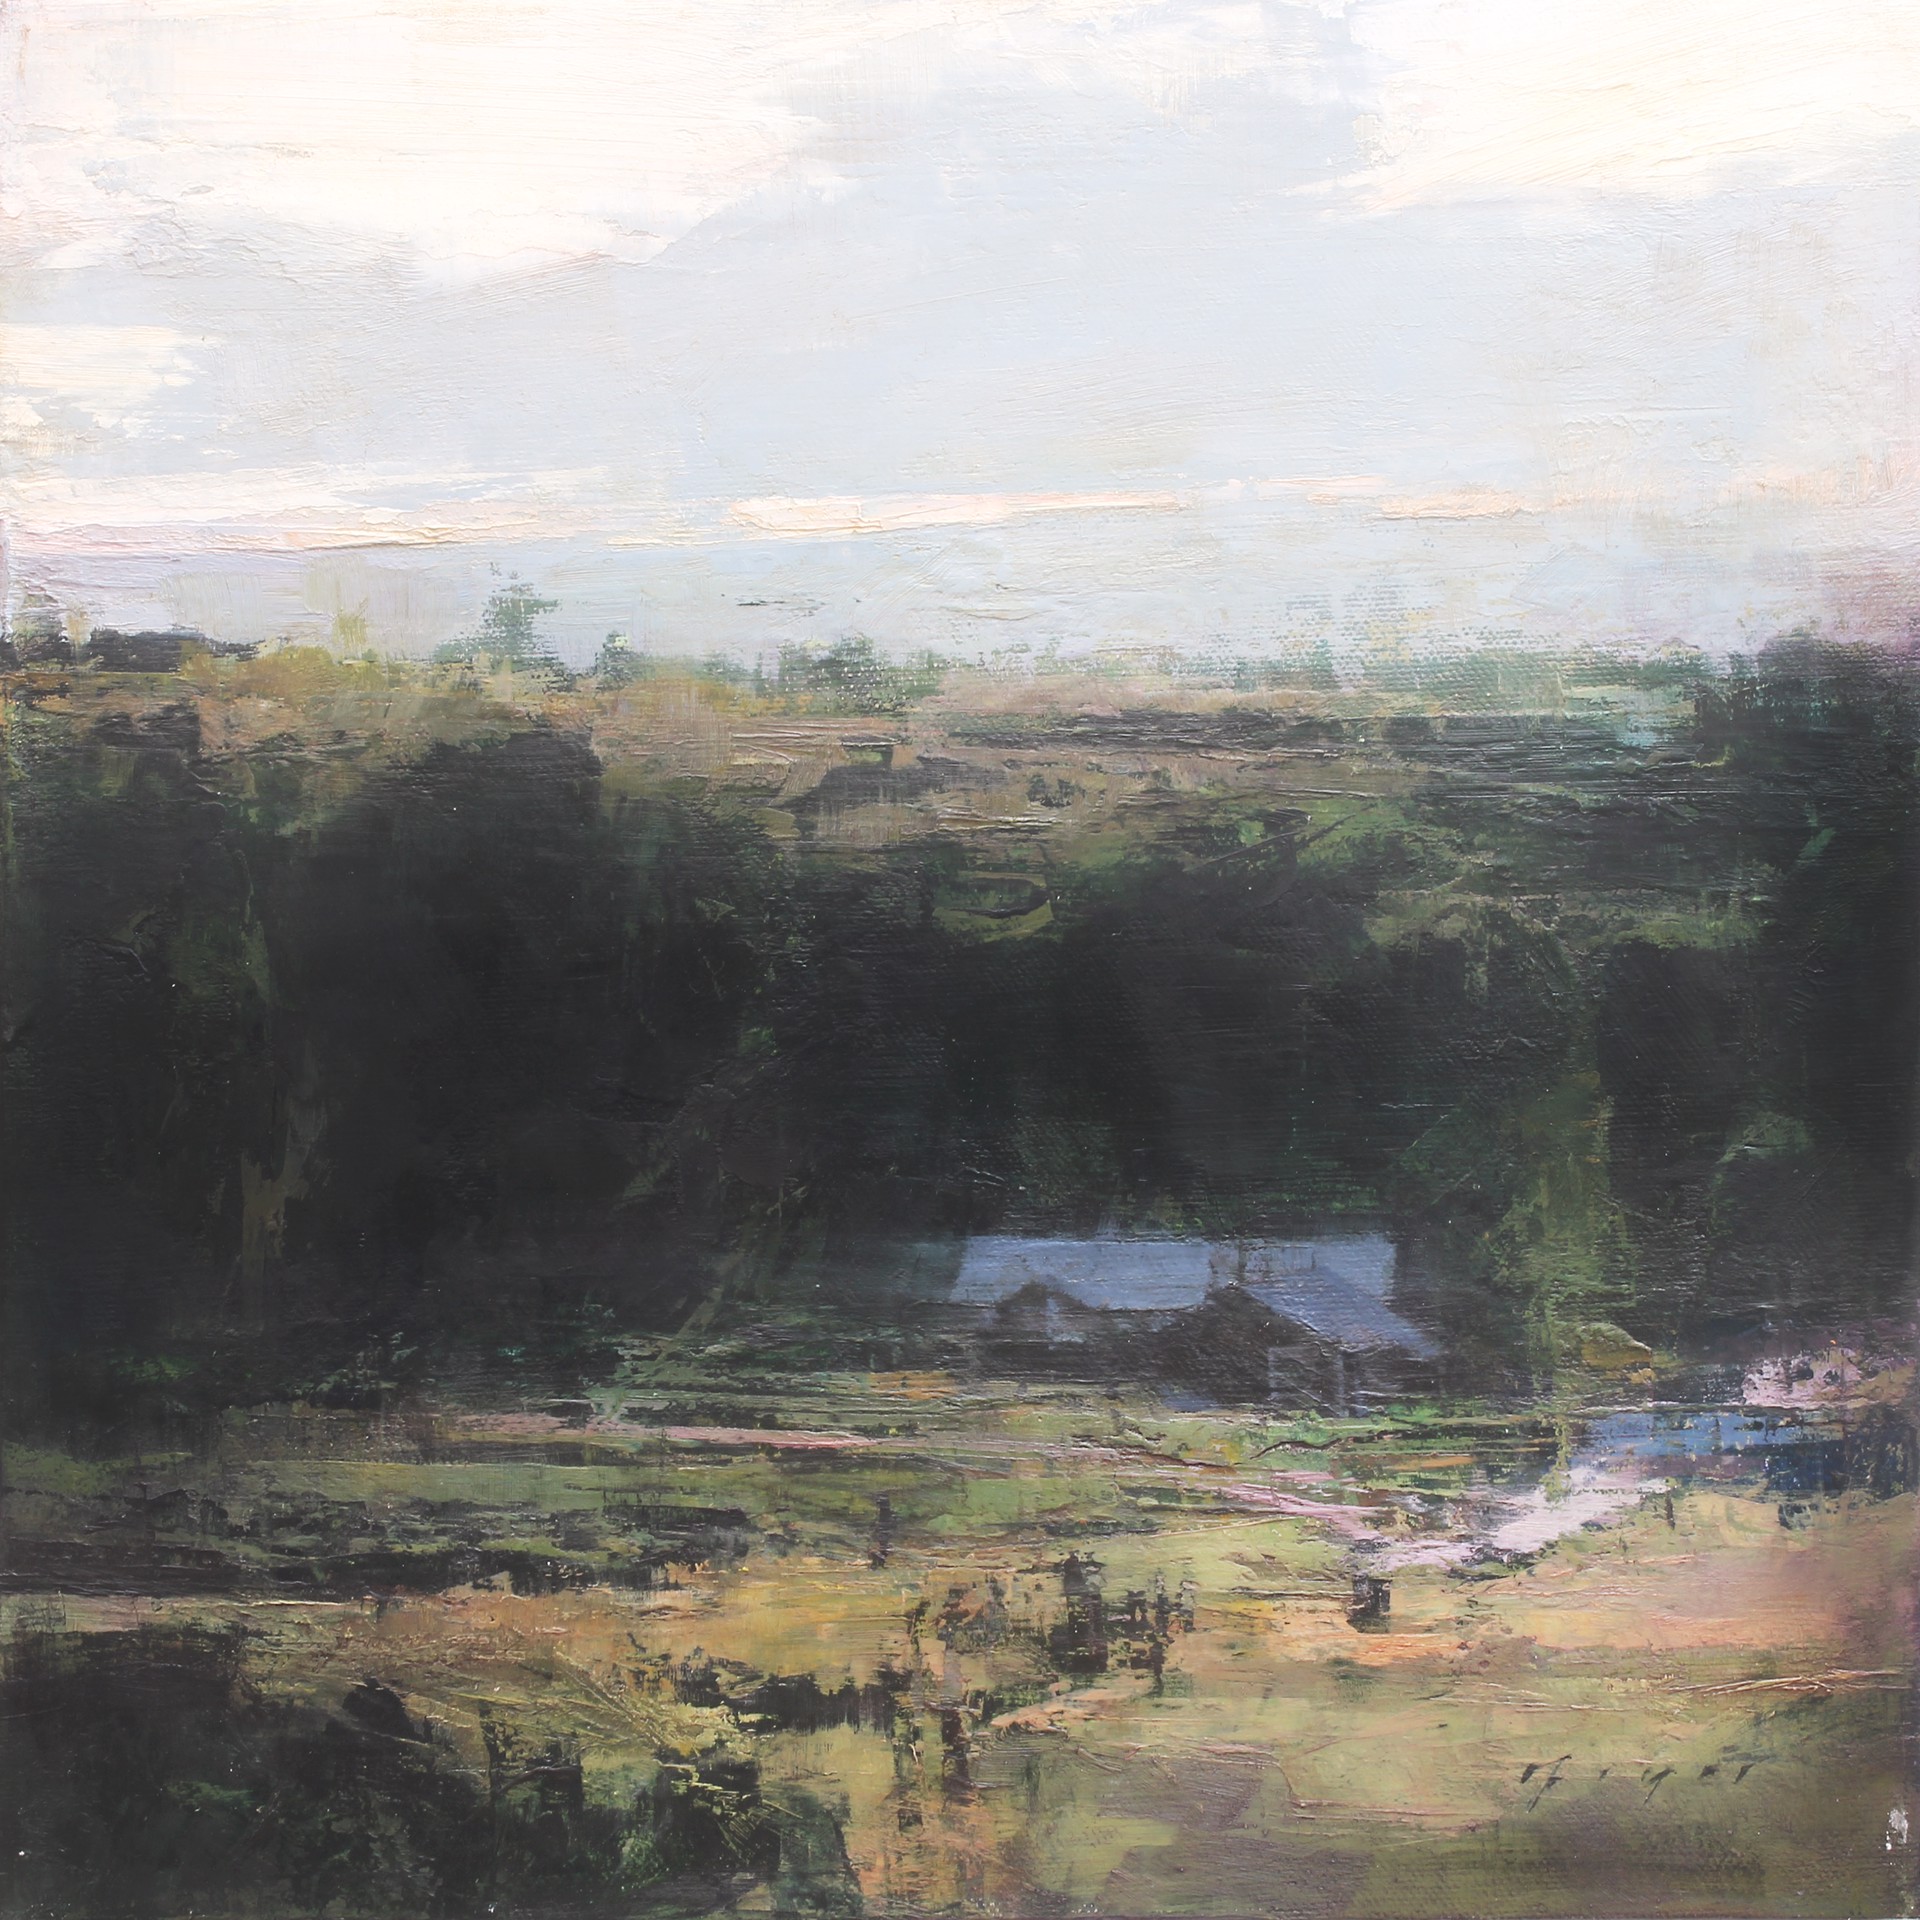 Farm in the Shadows by Douglas Fryer